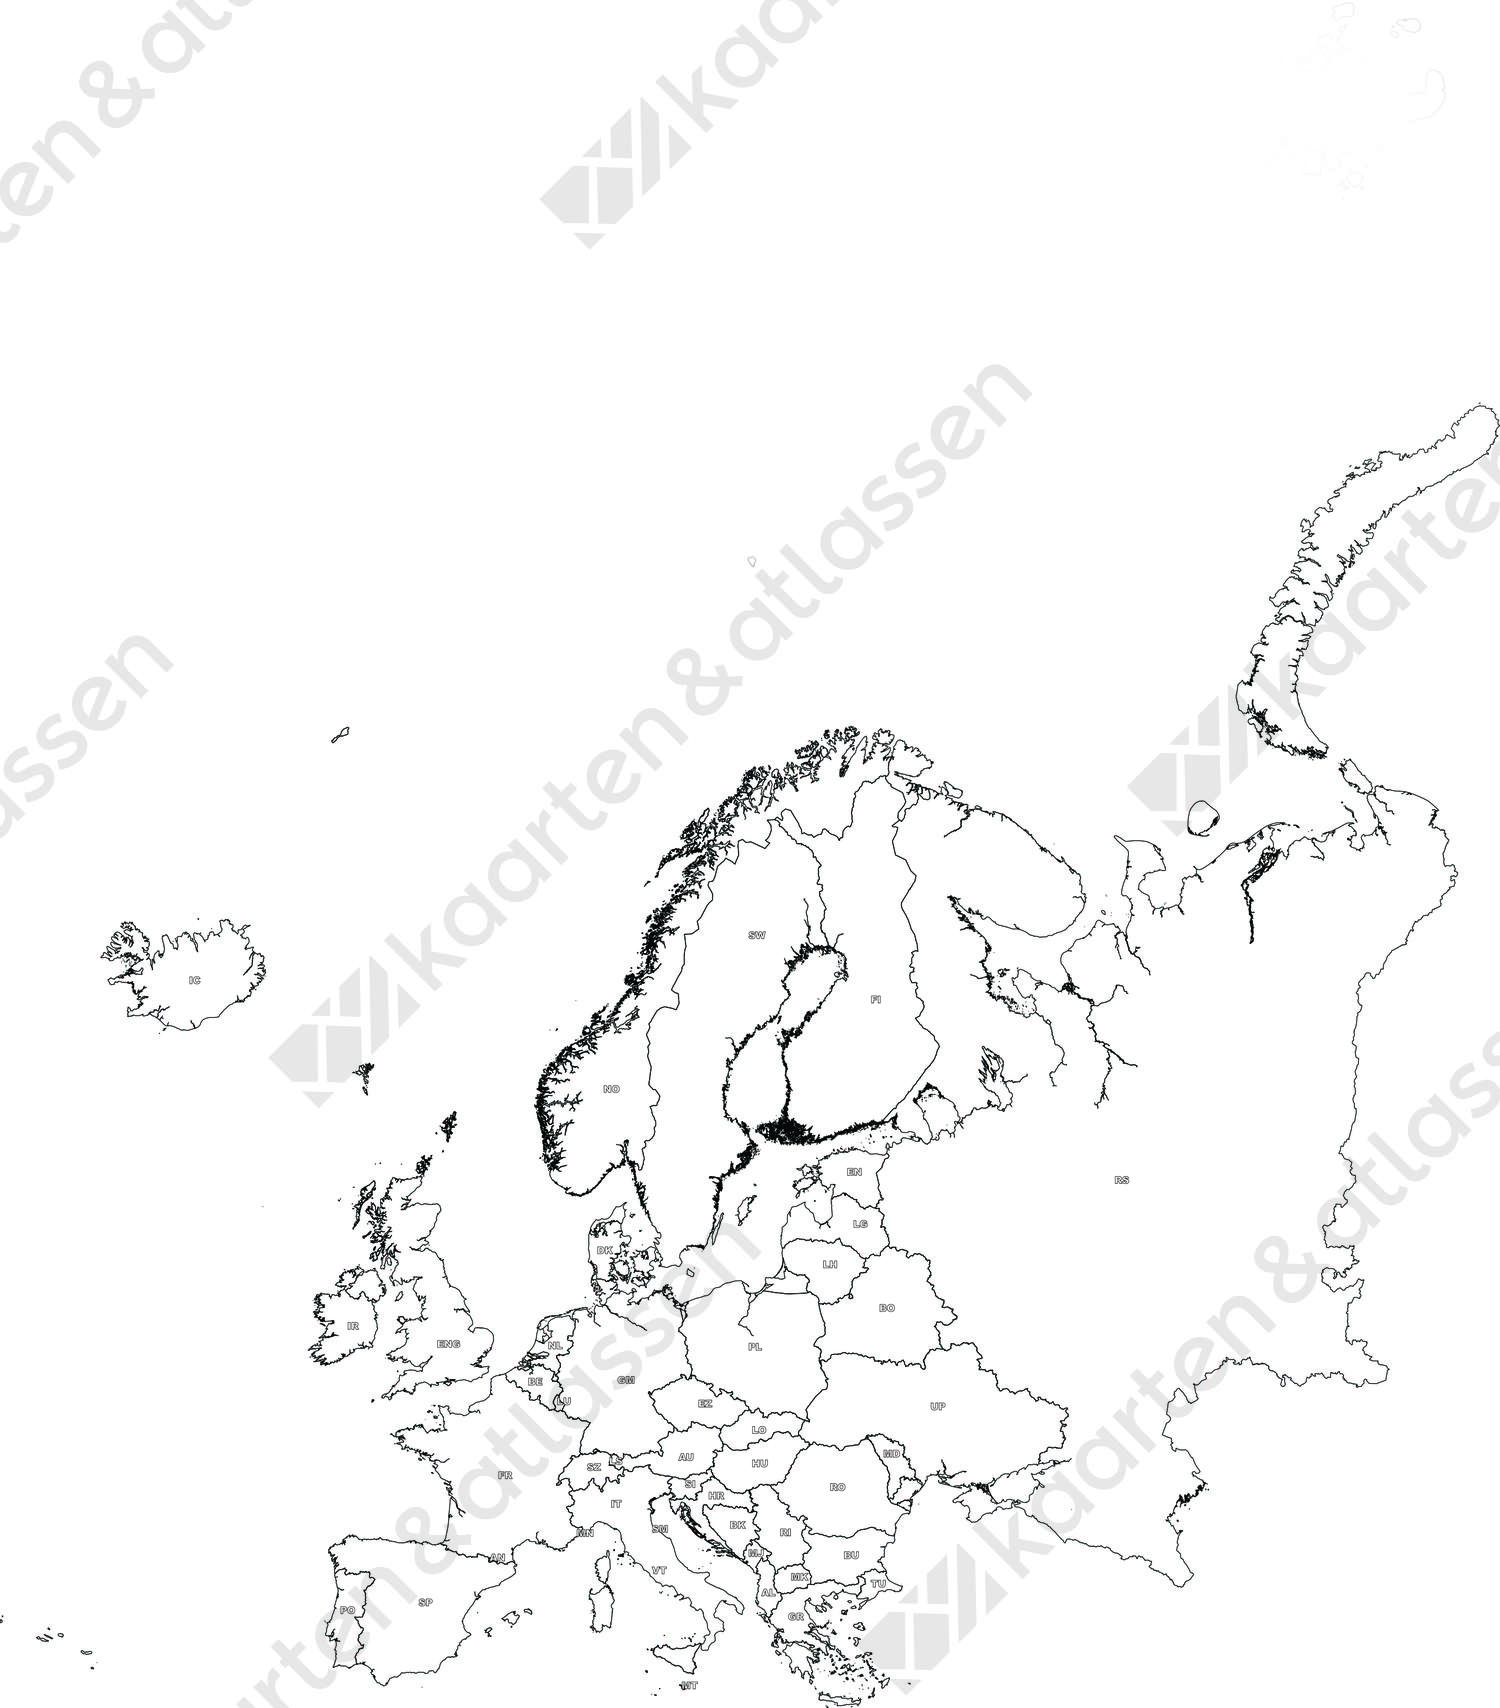 Digitale kaart van Europa | en Atlassen.nl